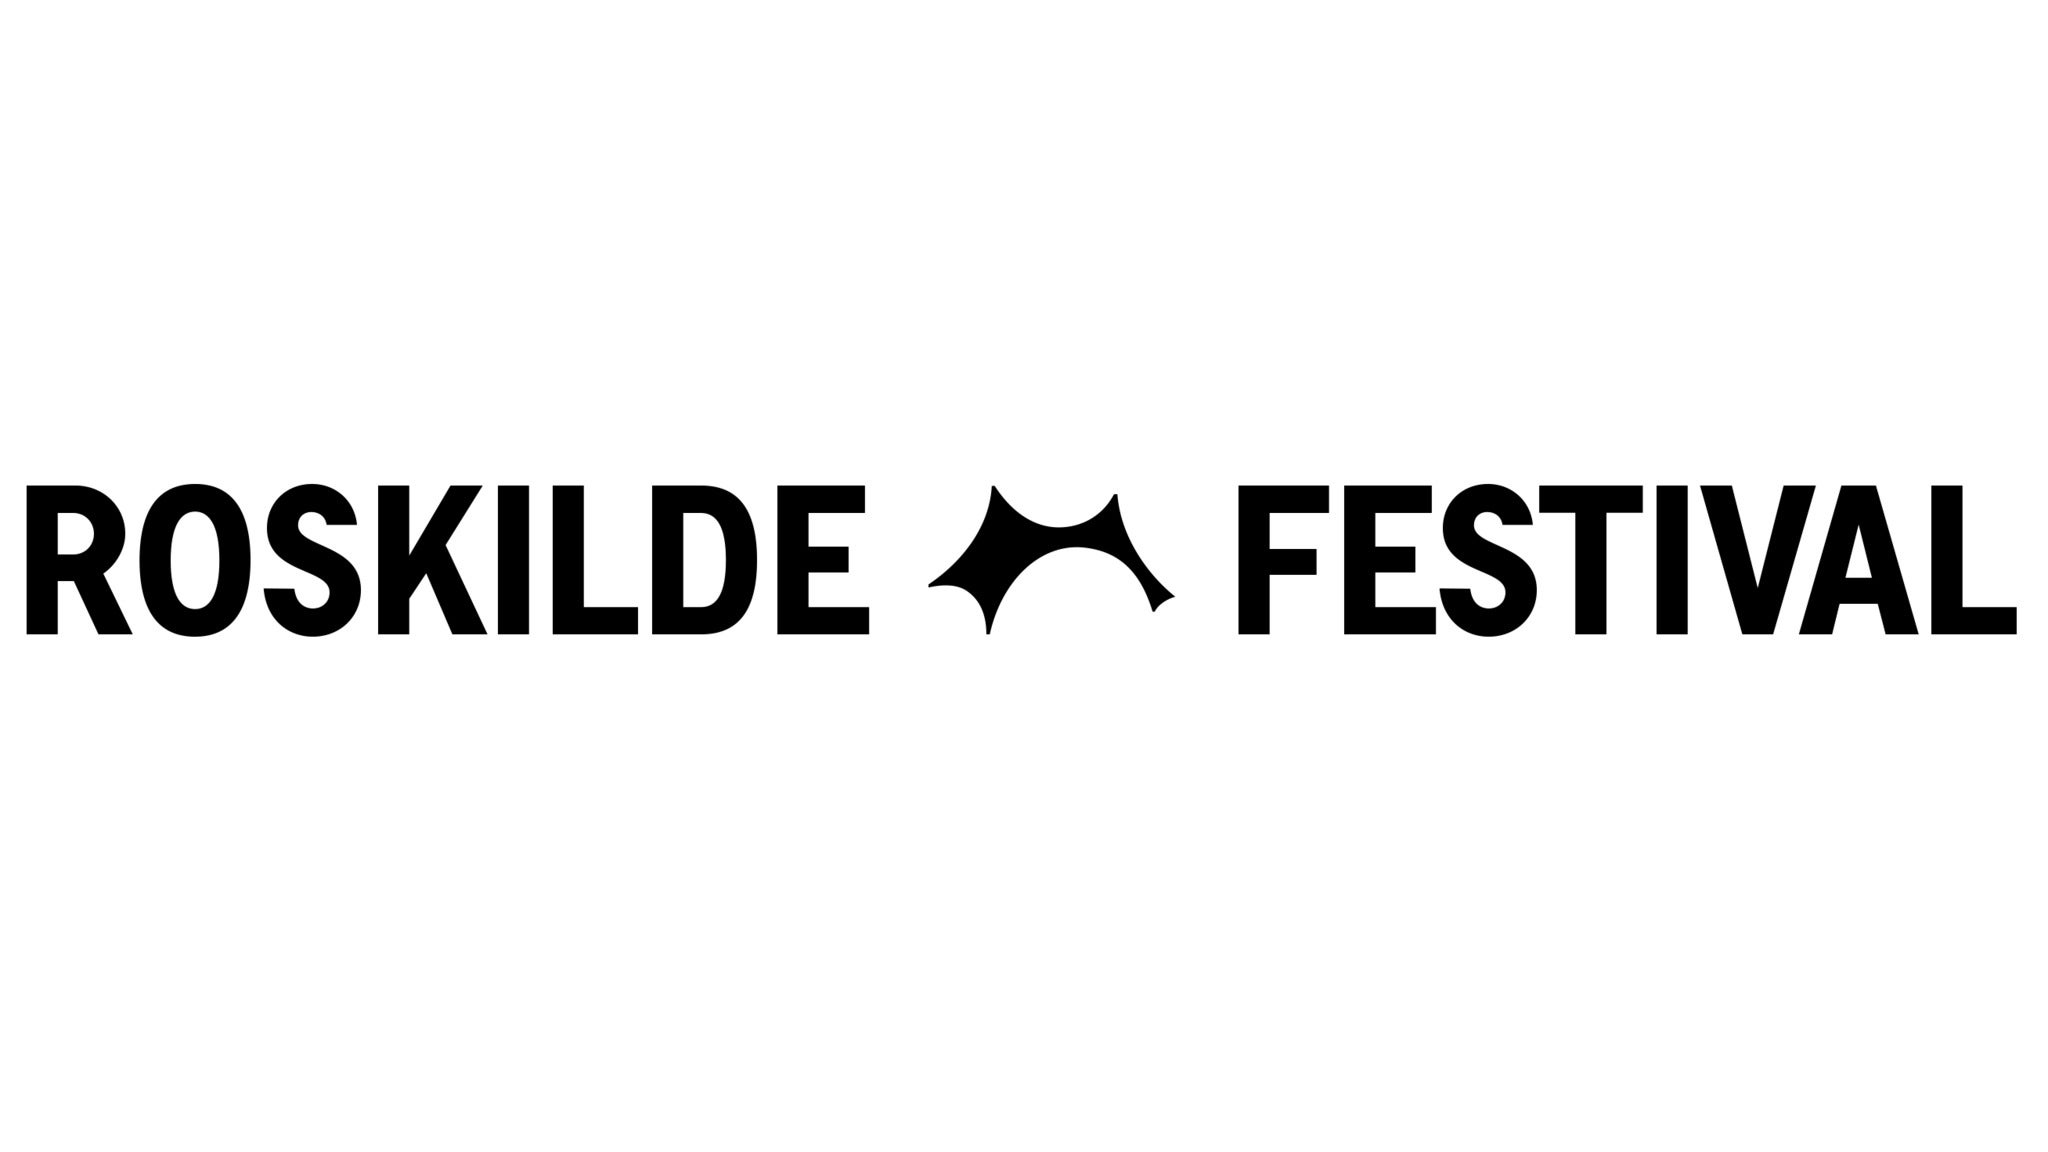 Roskilde Festival 2022 - One-Day Ticket, Wednesday